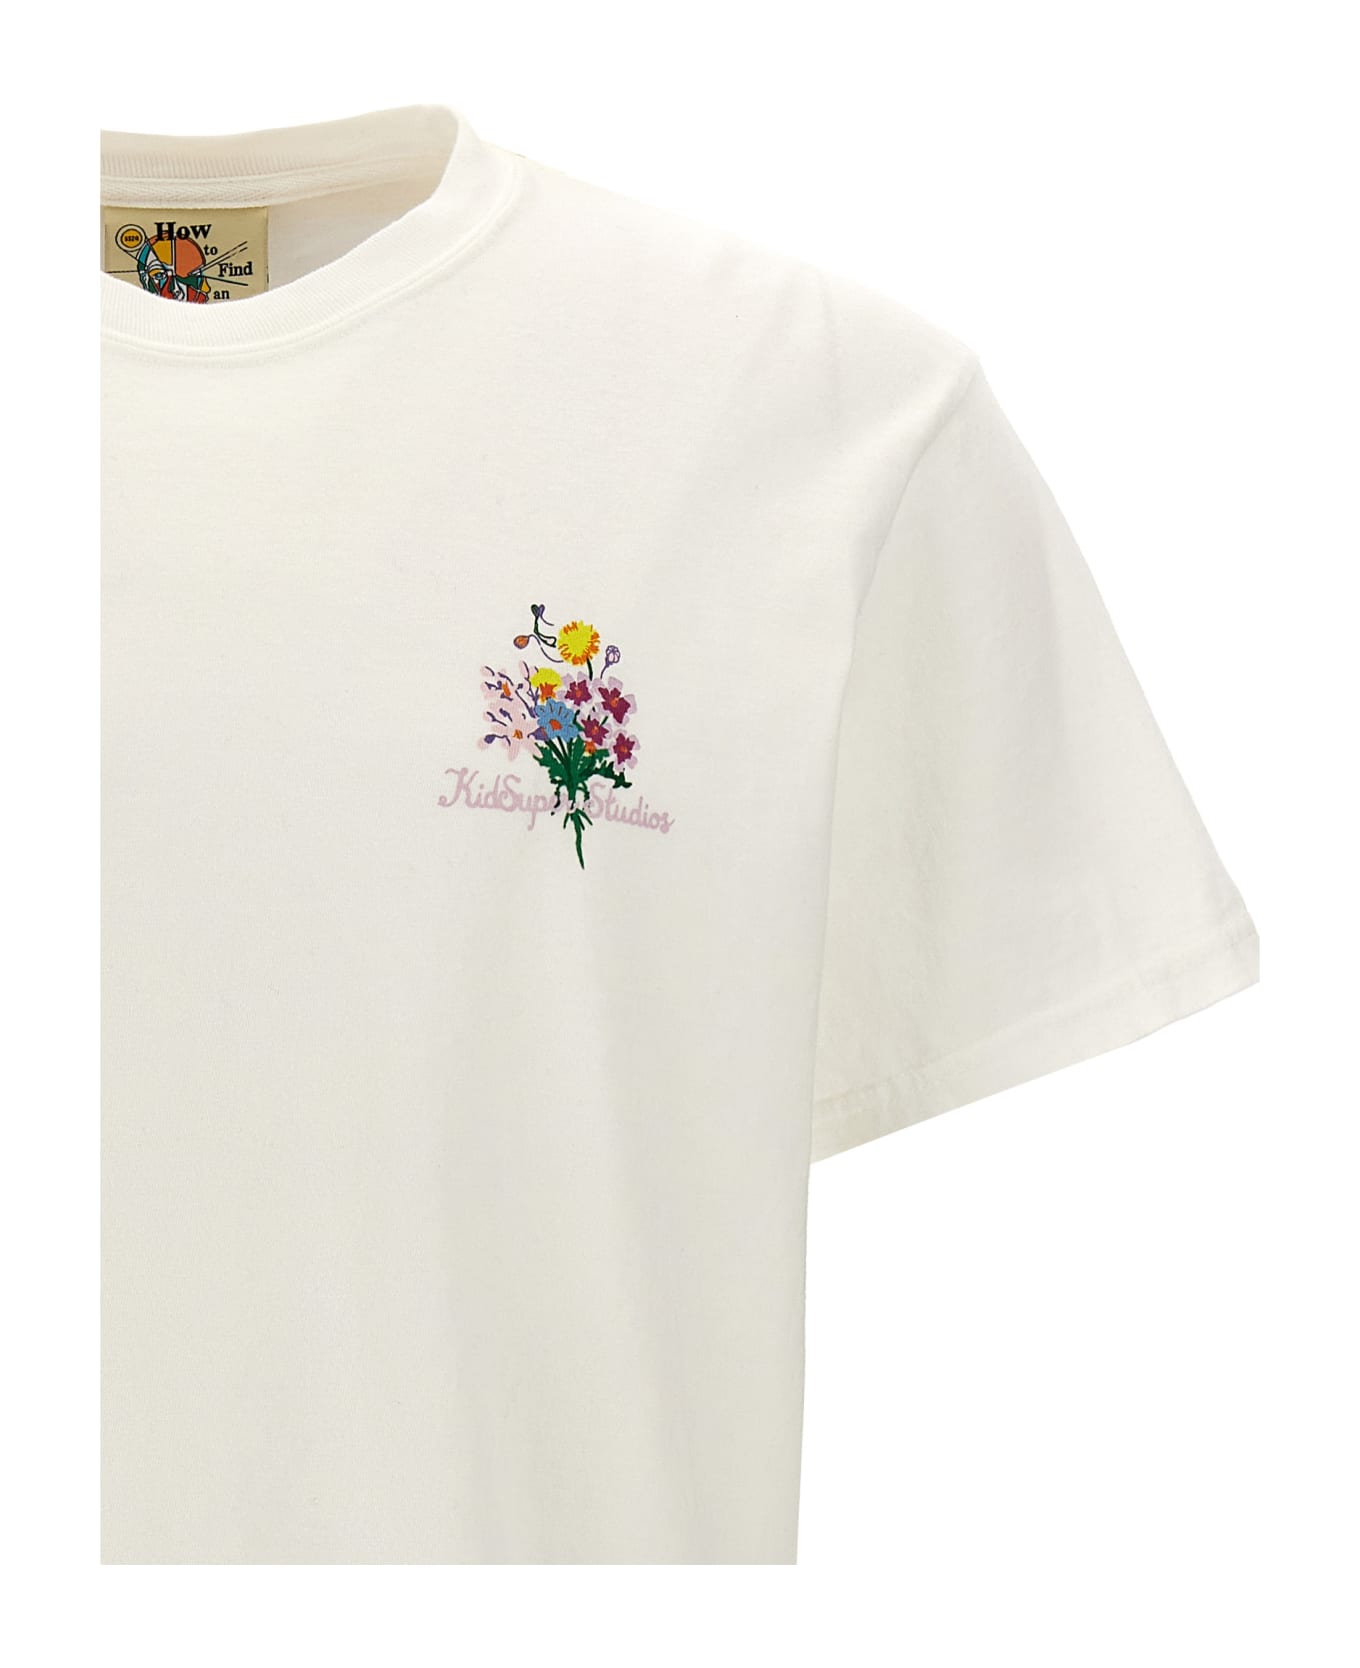 Kidsuper 'growing Ideas' T-shirt - White シャツ